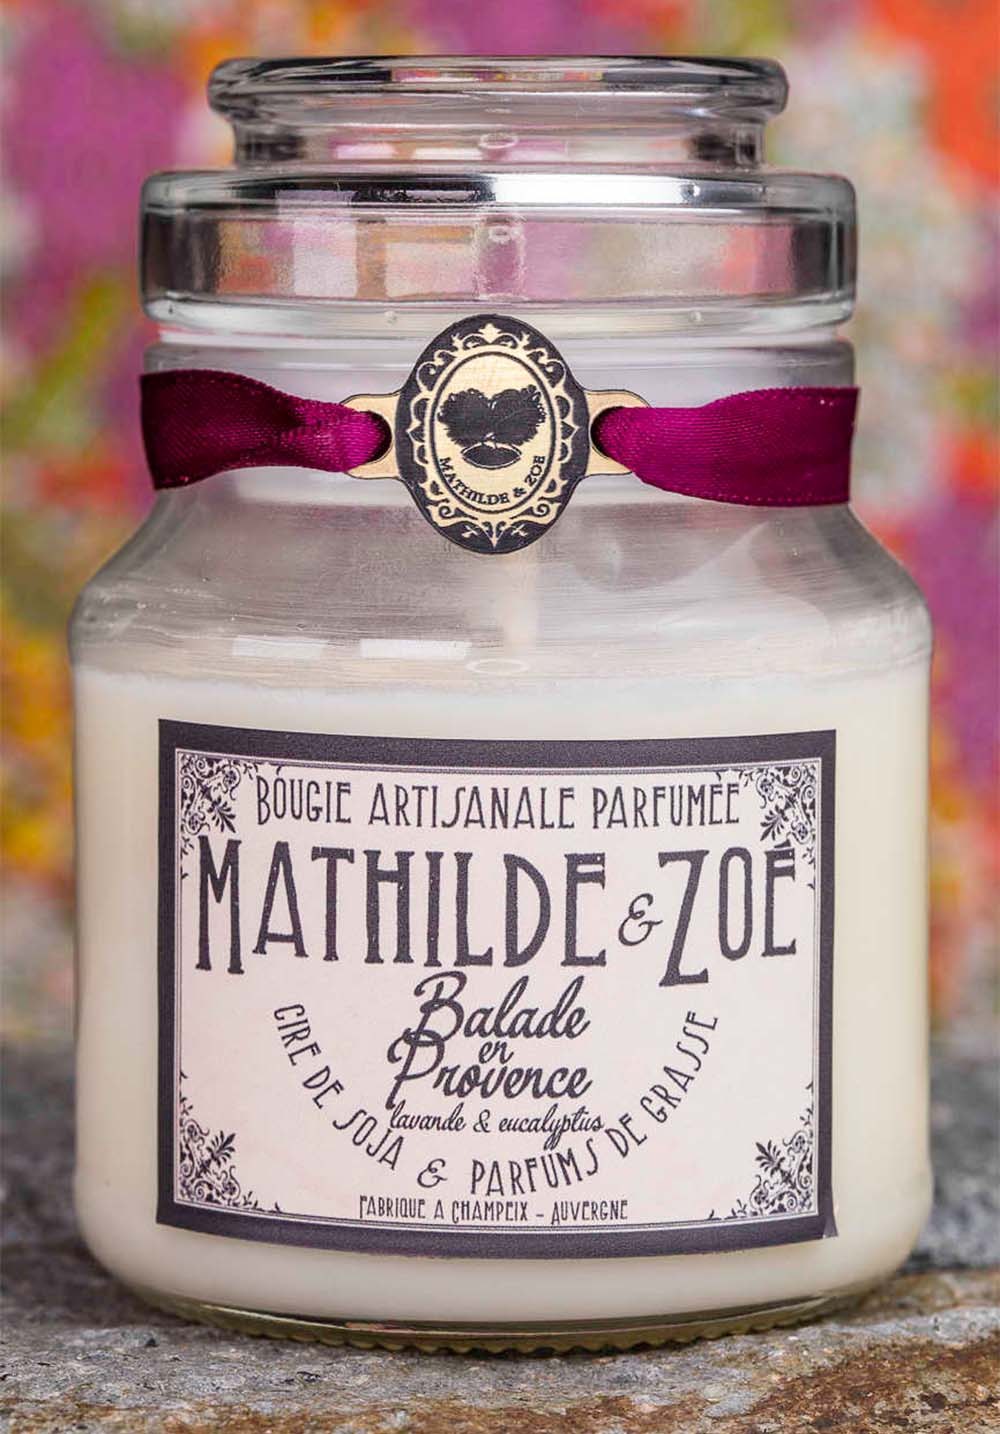 Bougie artisanale parfumée Mathilde et Zoé - Balade en Provence